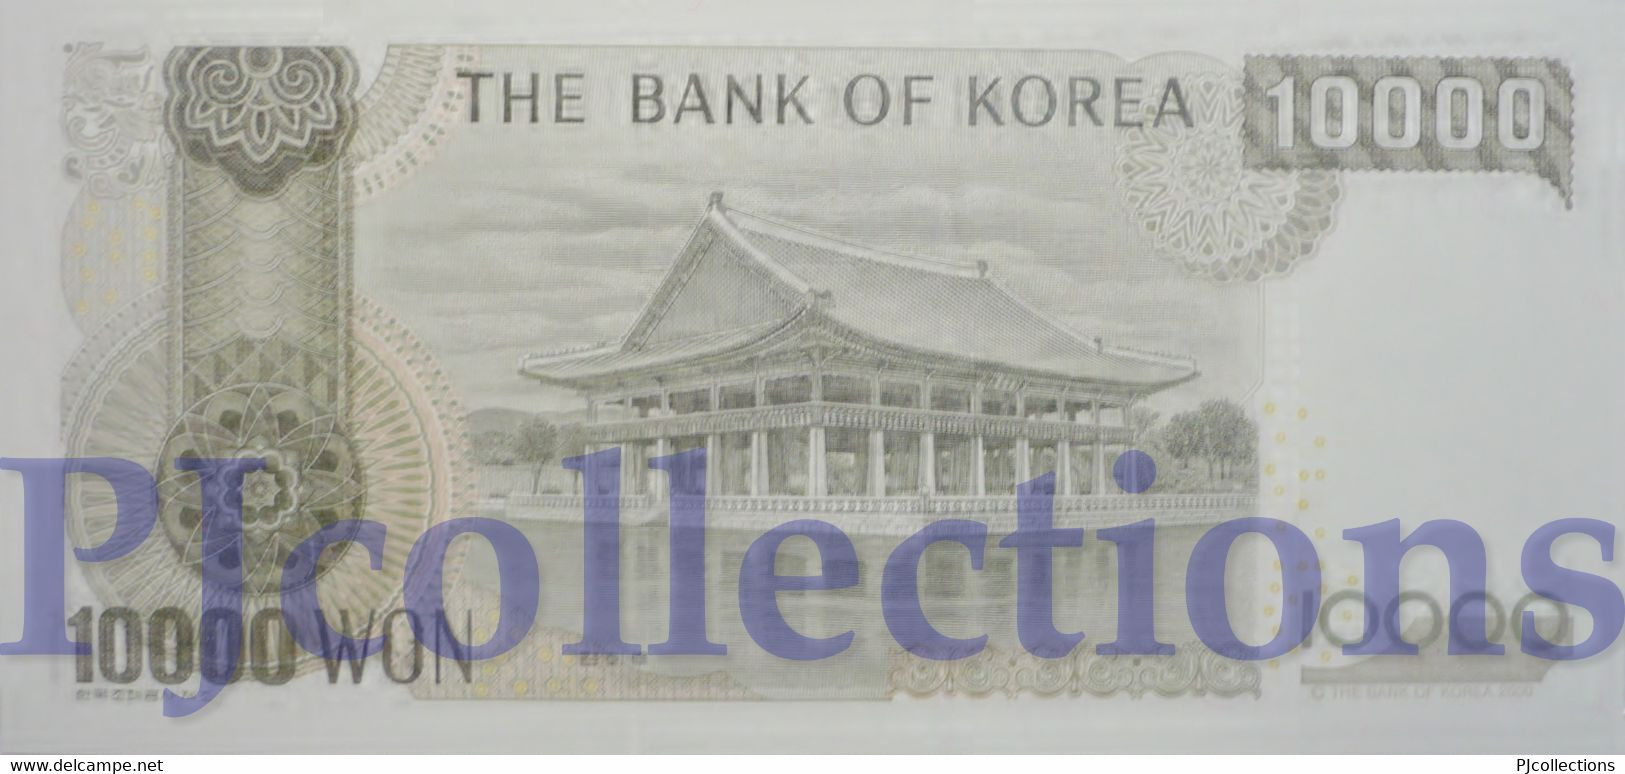 SOUTH KOREA 10000 WON 2000 PICK 52 UNC - Korea (Süd-)